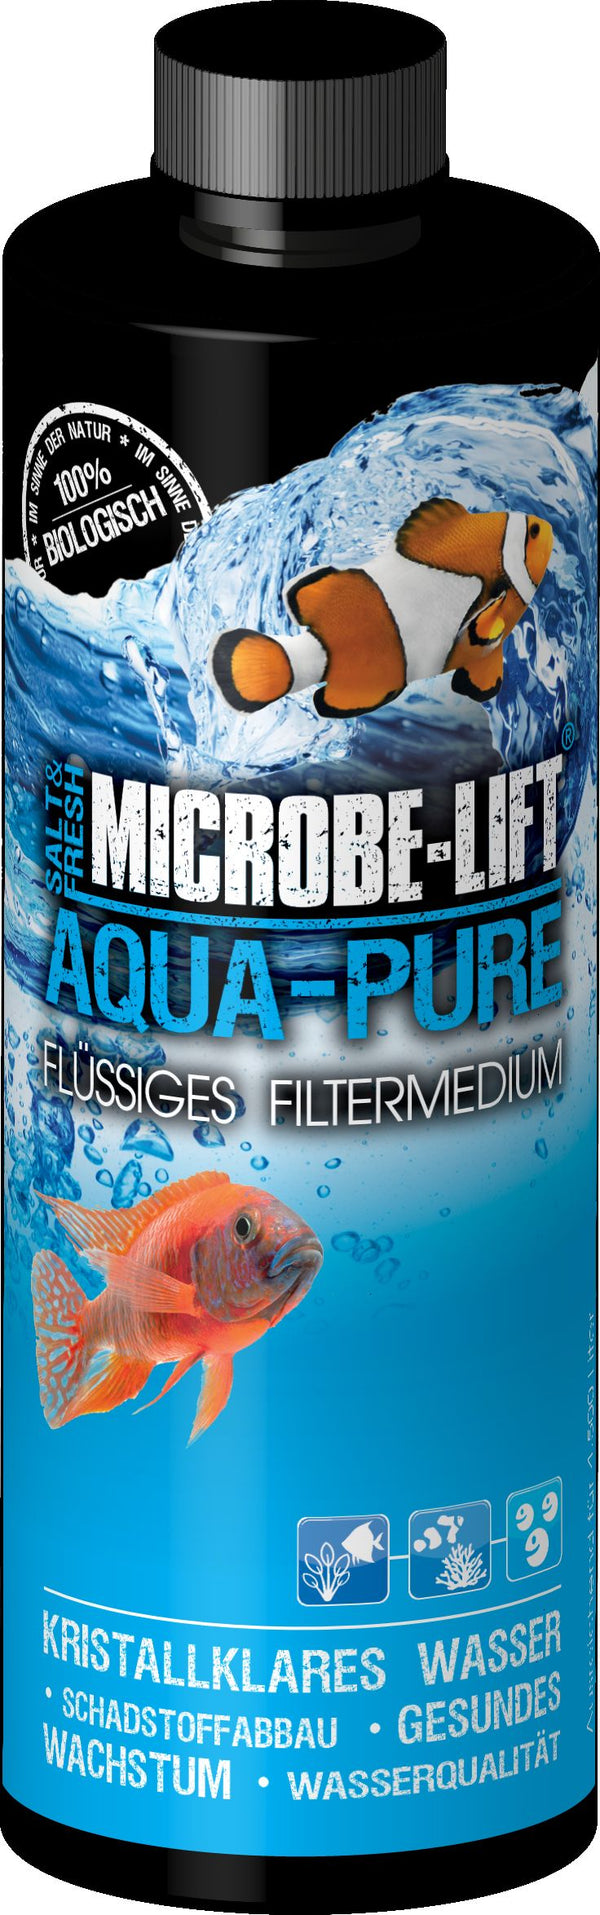 Aqua-Pure - flüssiges Filtermedium mit Bakterien (118 ml.) Microbe-Lift